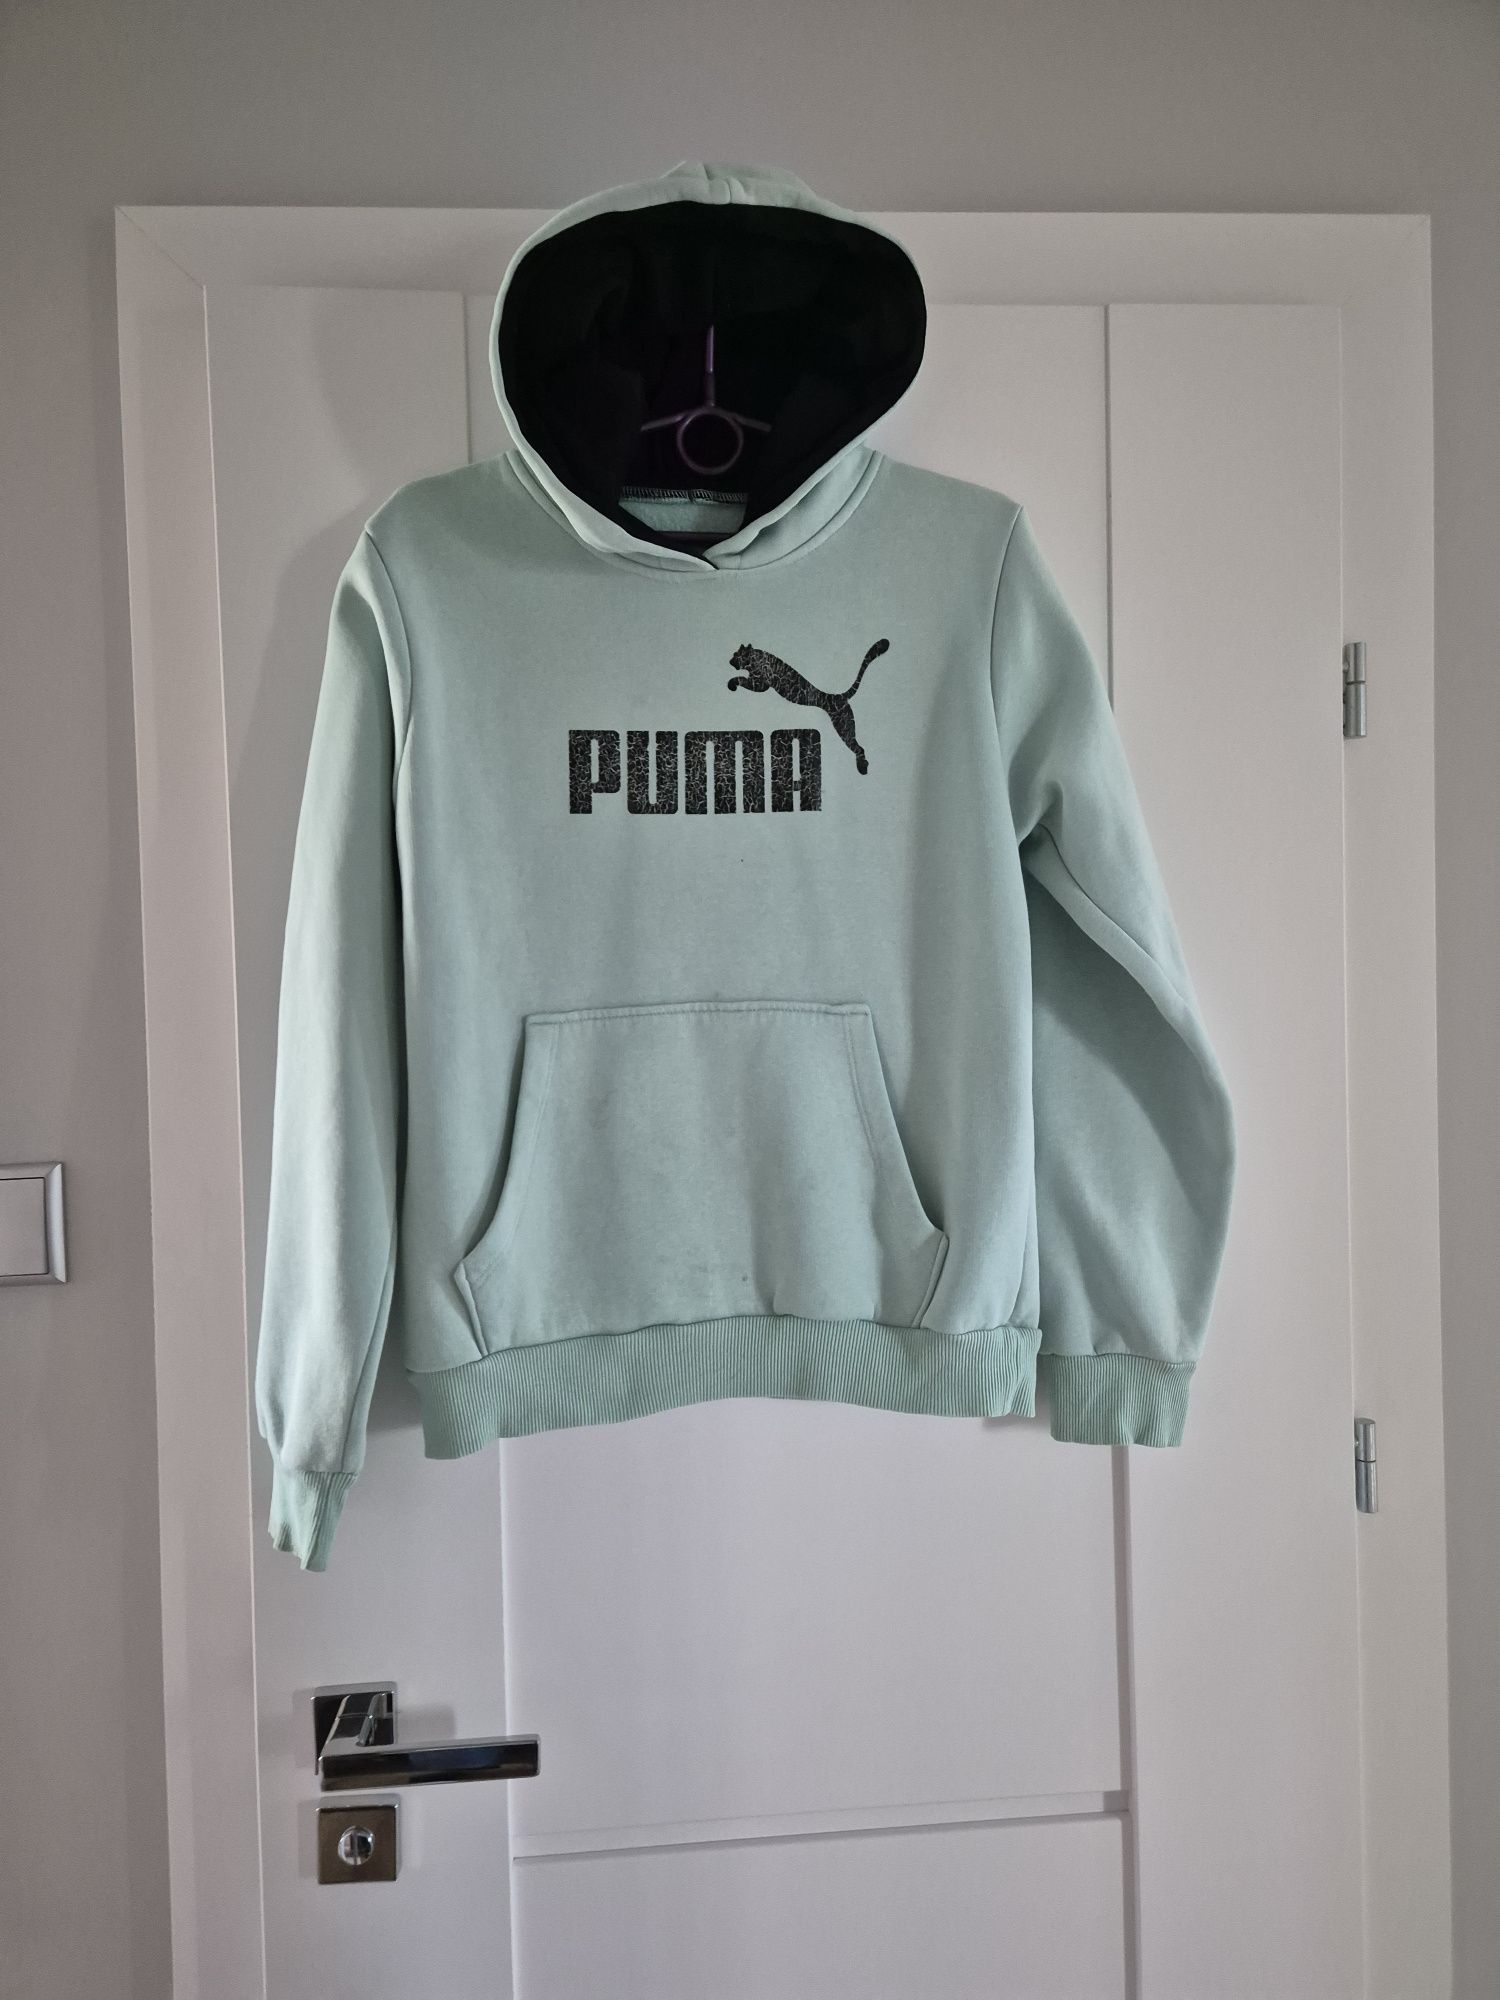 Bluza  Puma  miętowa  M